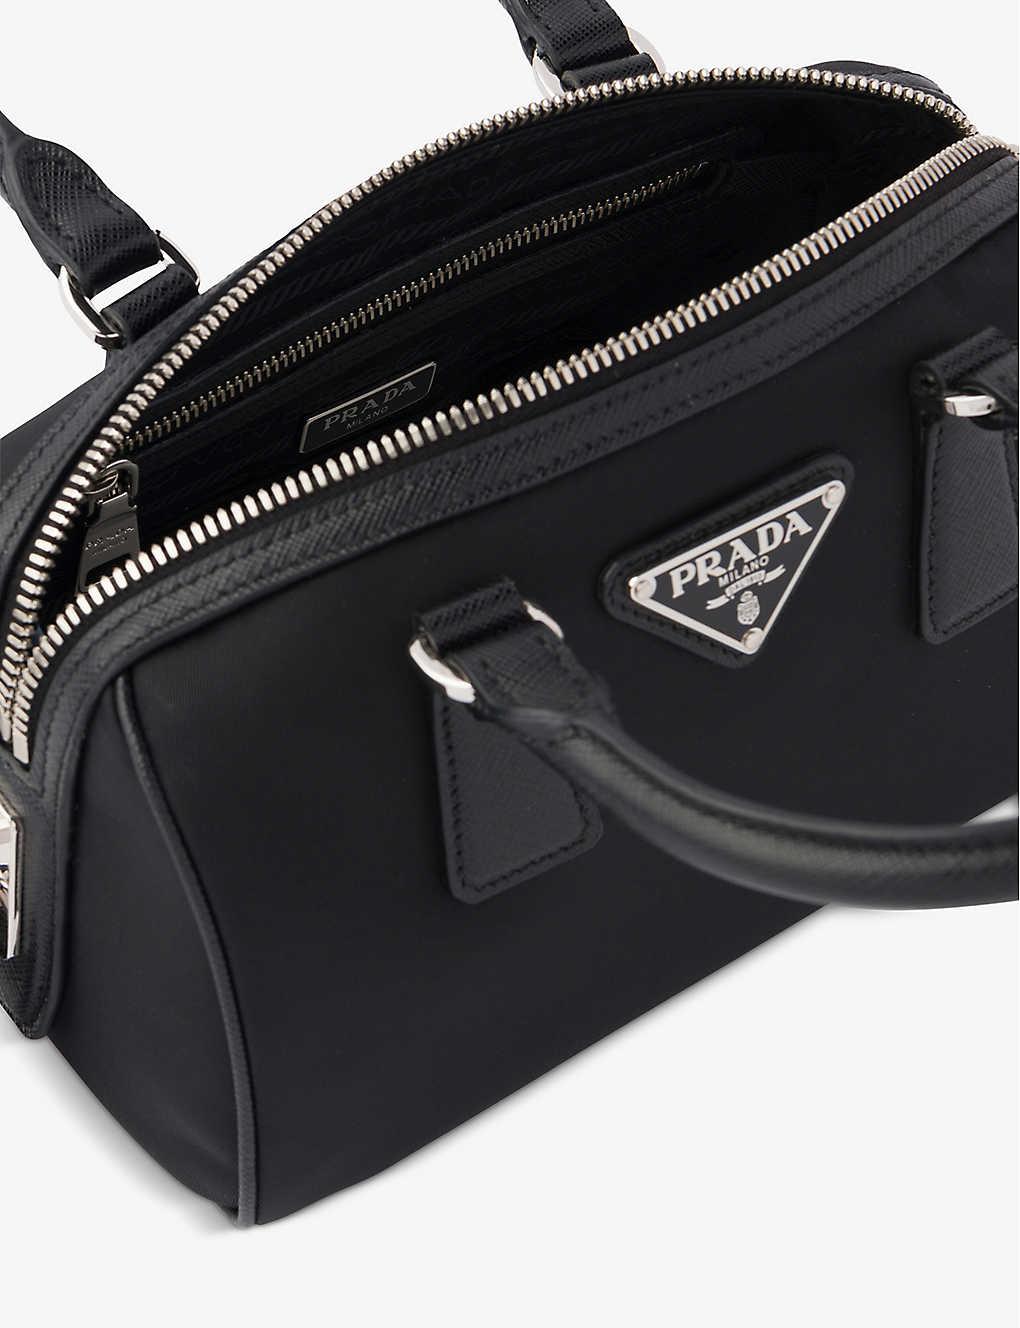 Prada Bauletto Recycled Nylon Shoulder Bag in Black | Lyst